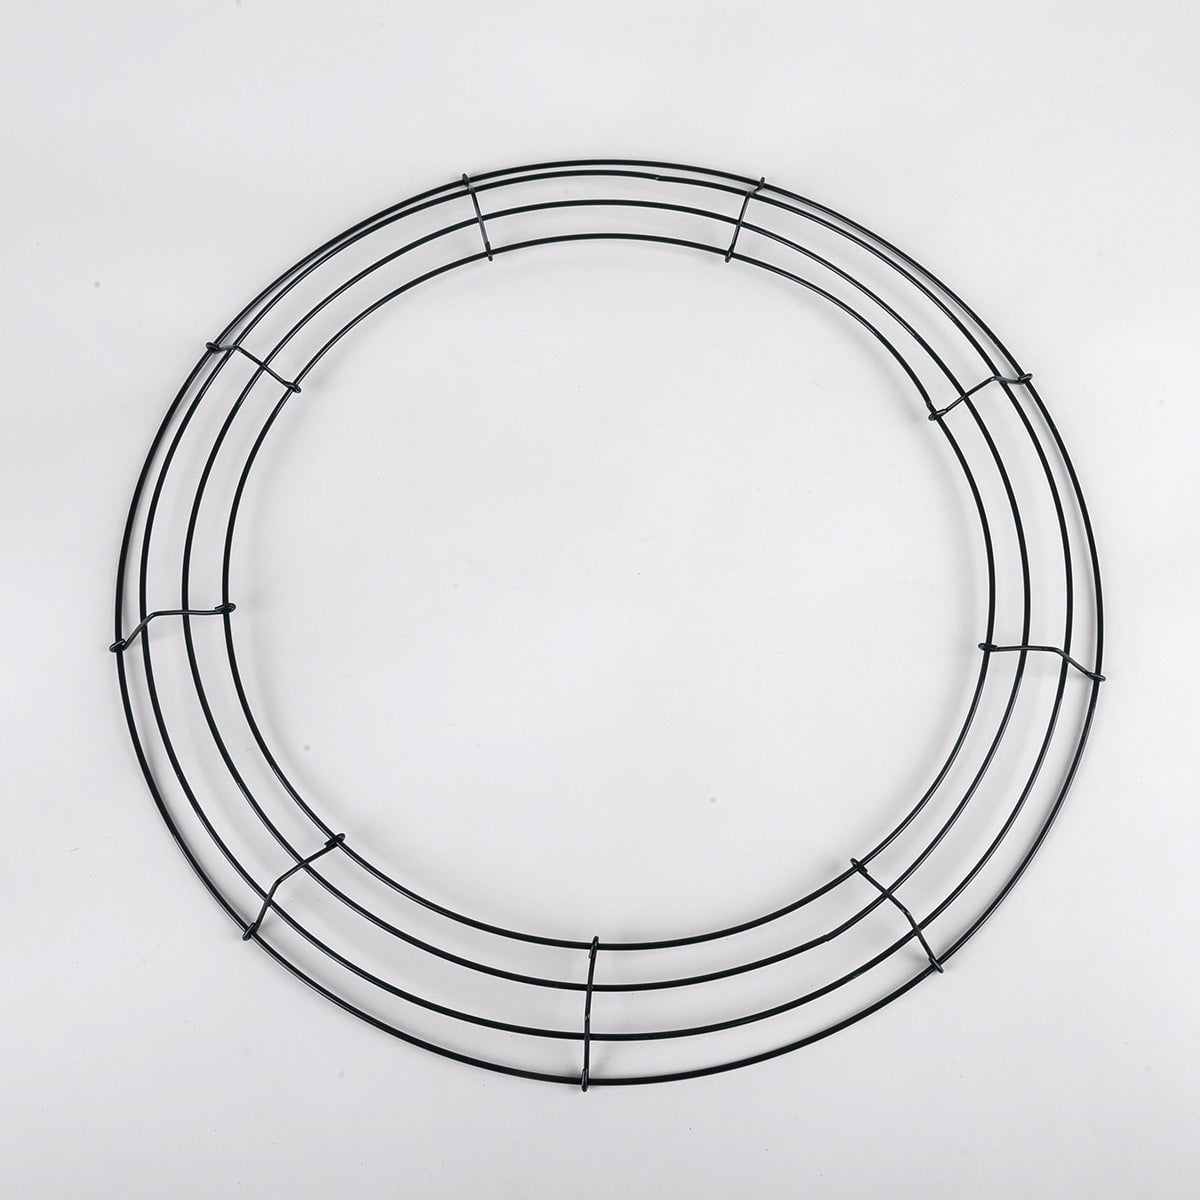 16 inch Wreath Wire Frames - Bundle of 10pcs